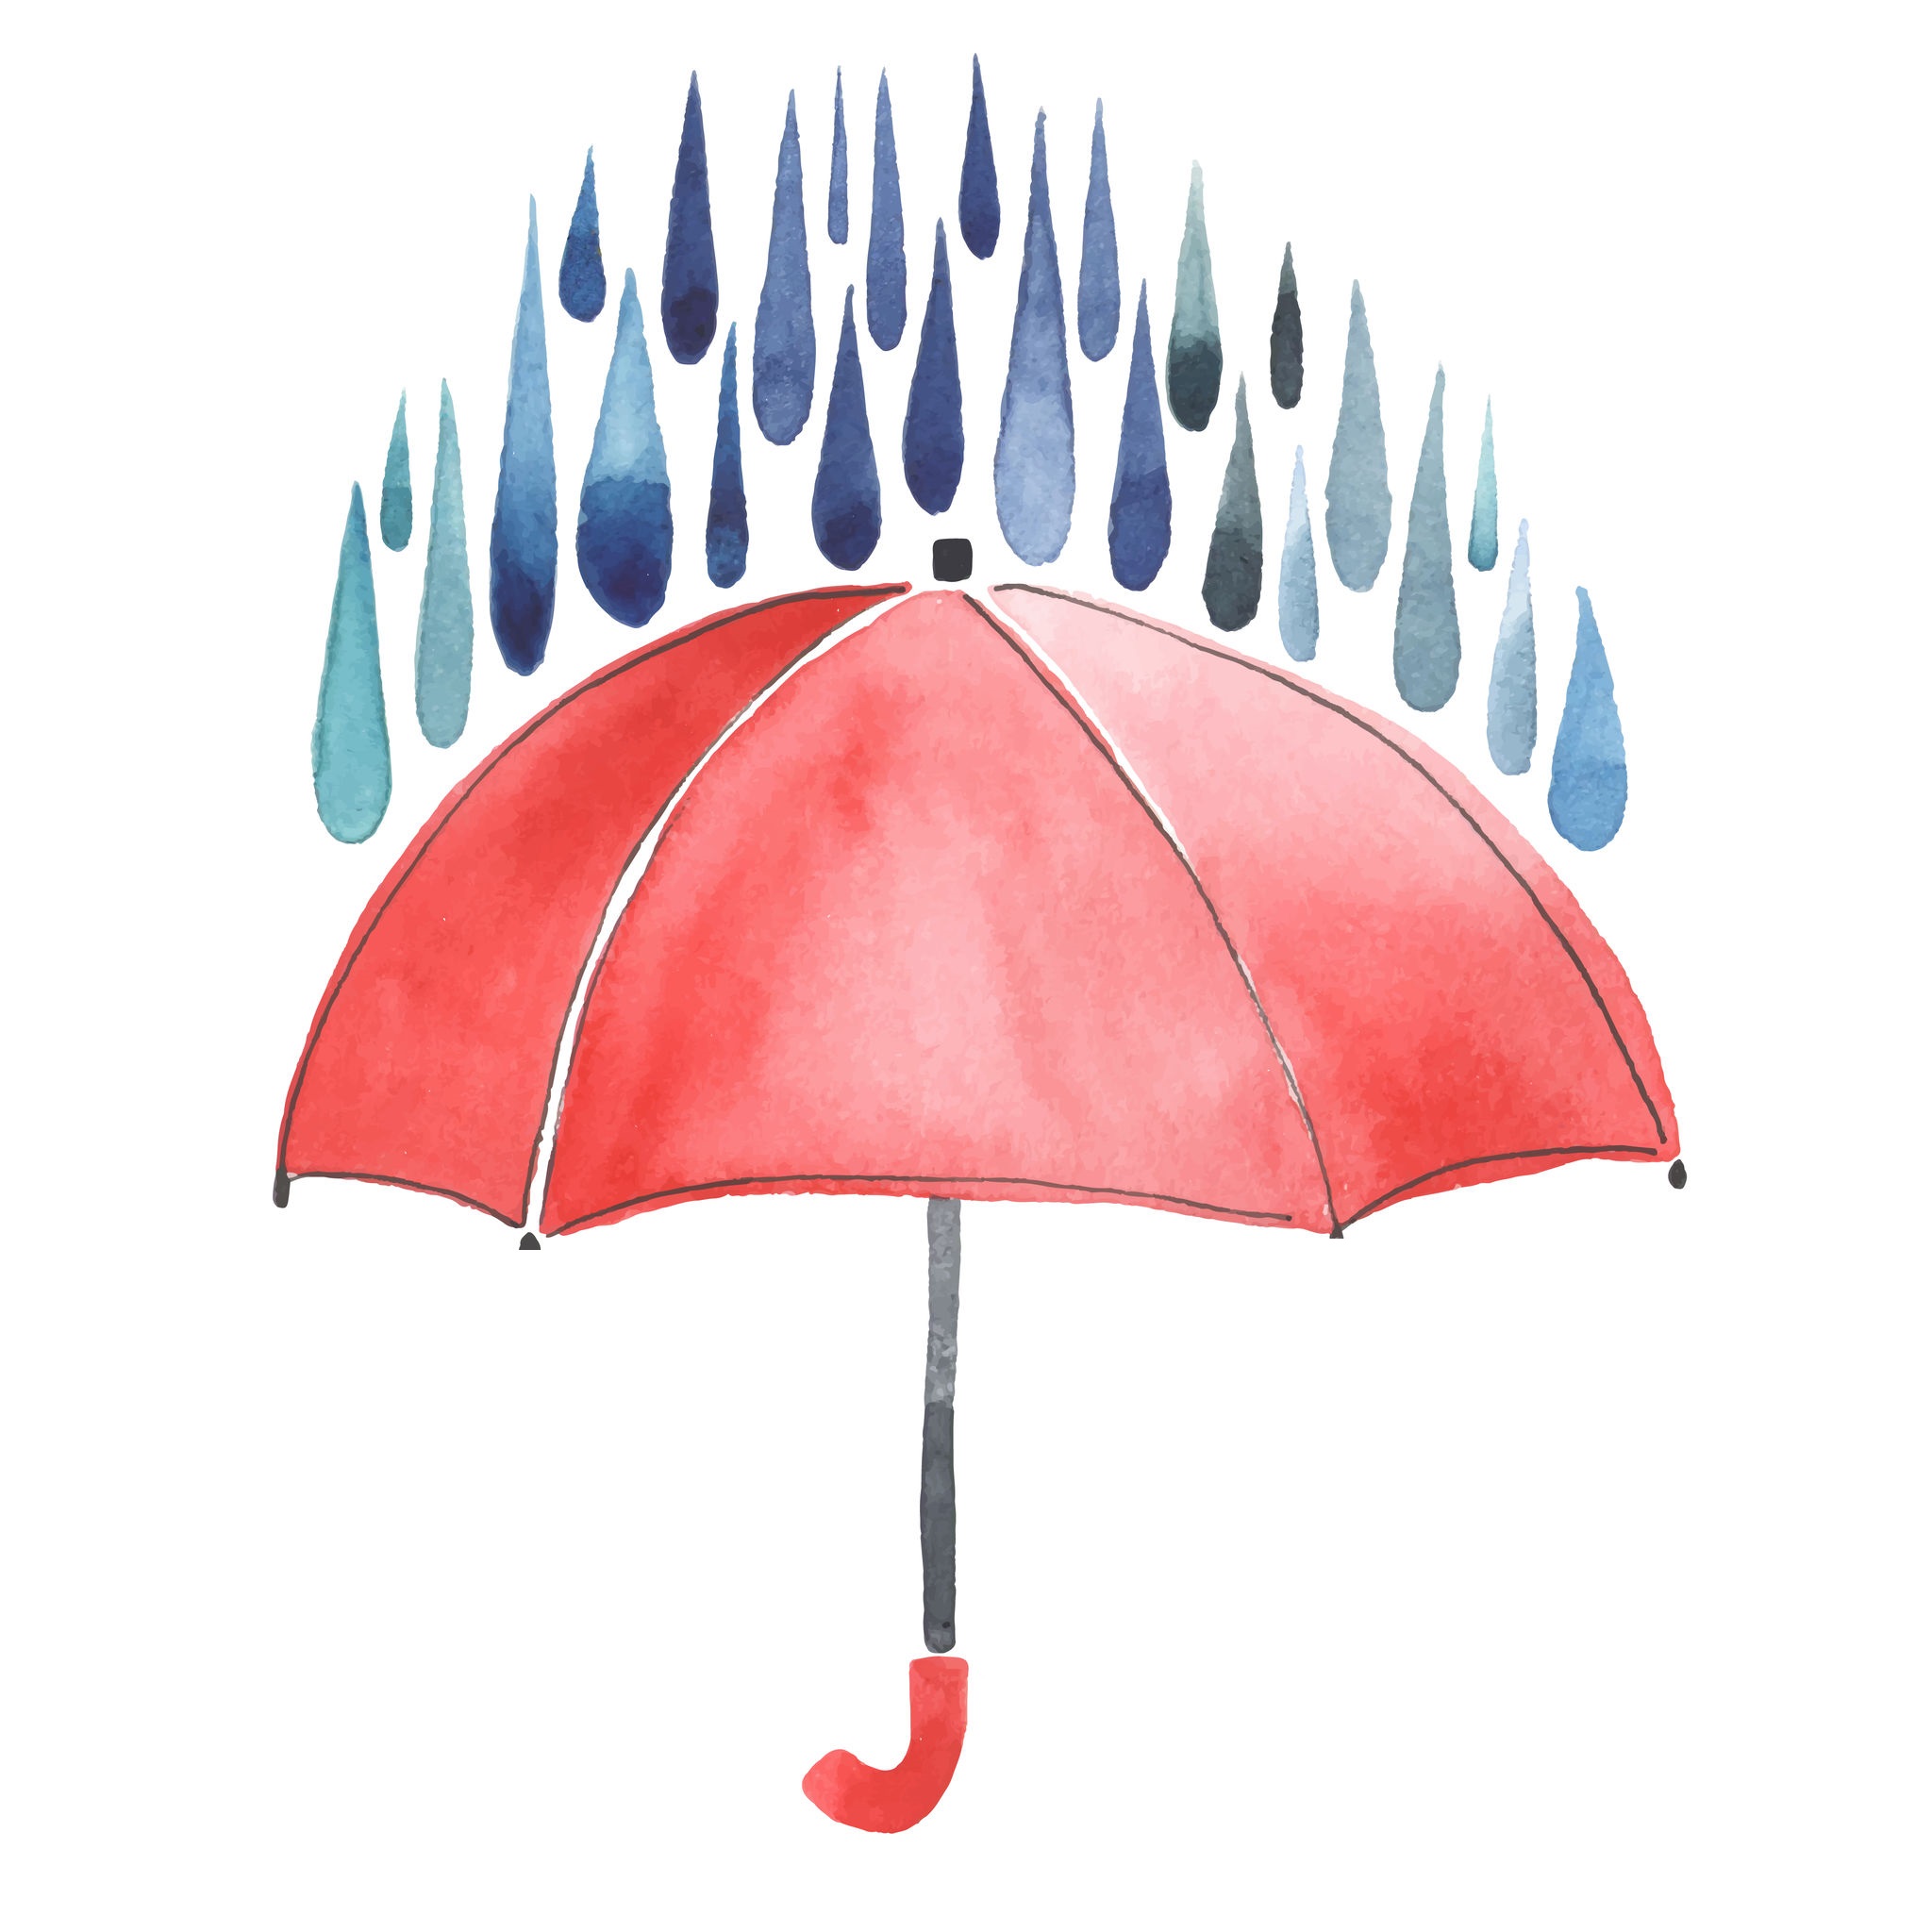 Illustration: raindrops falling onto an opened red umbrella